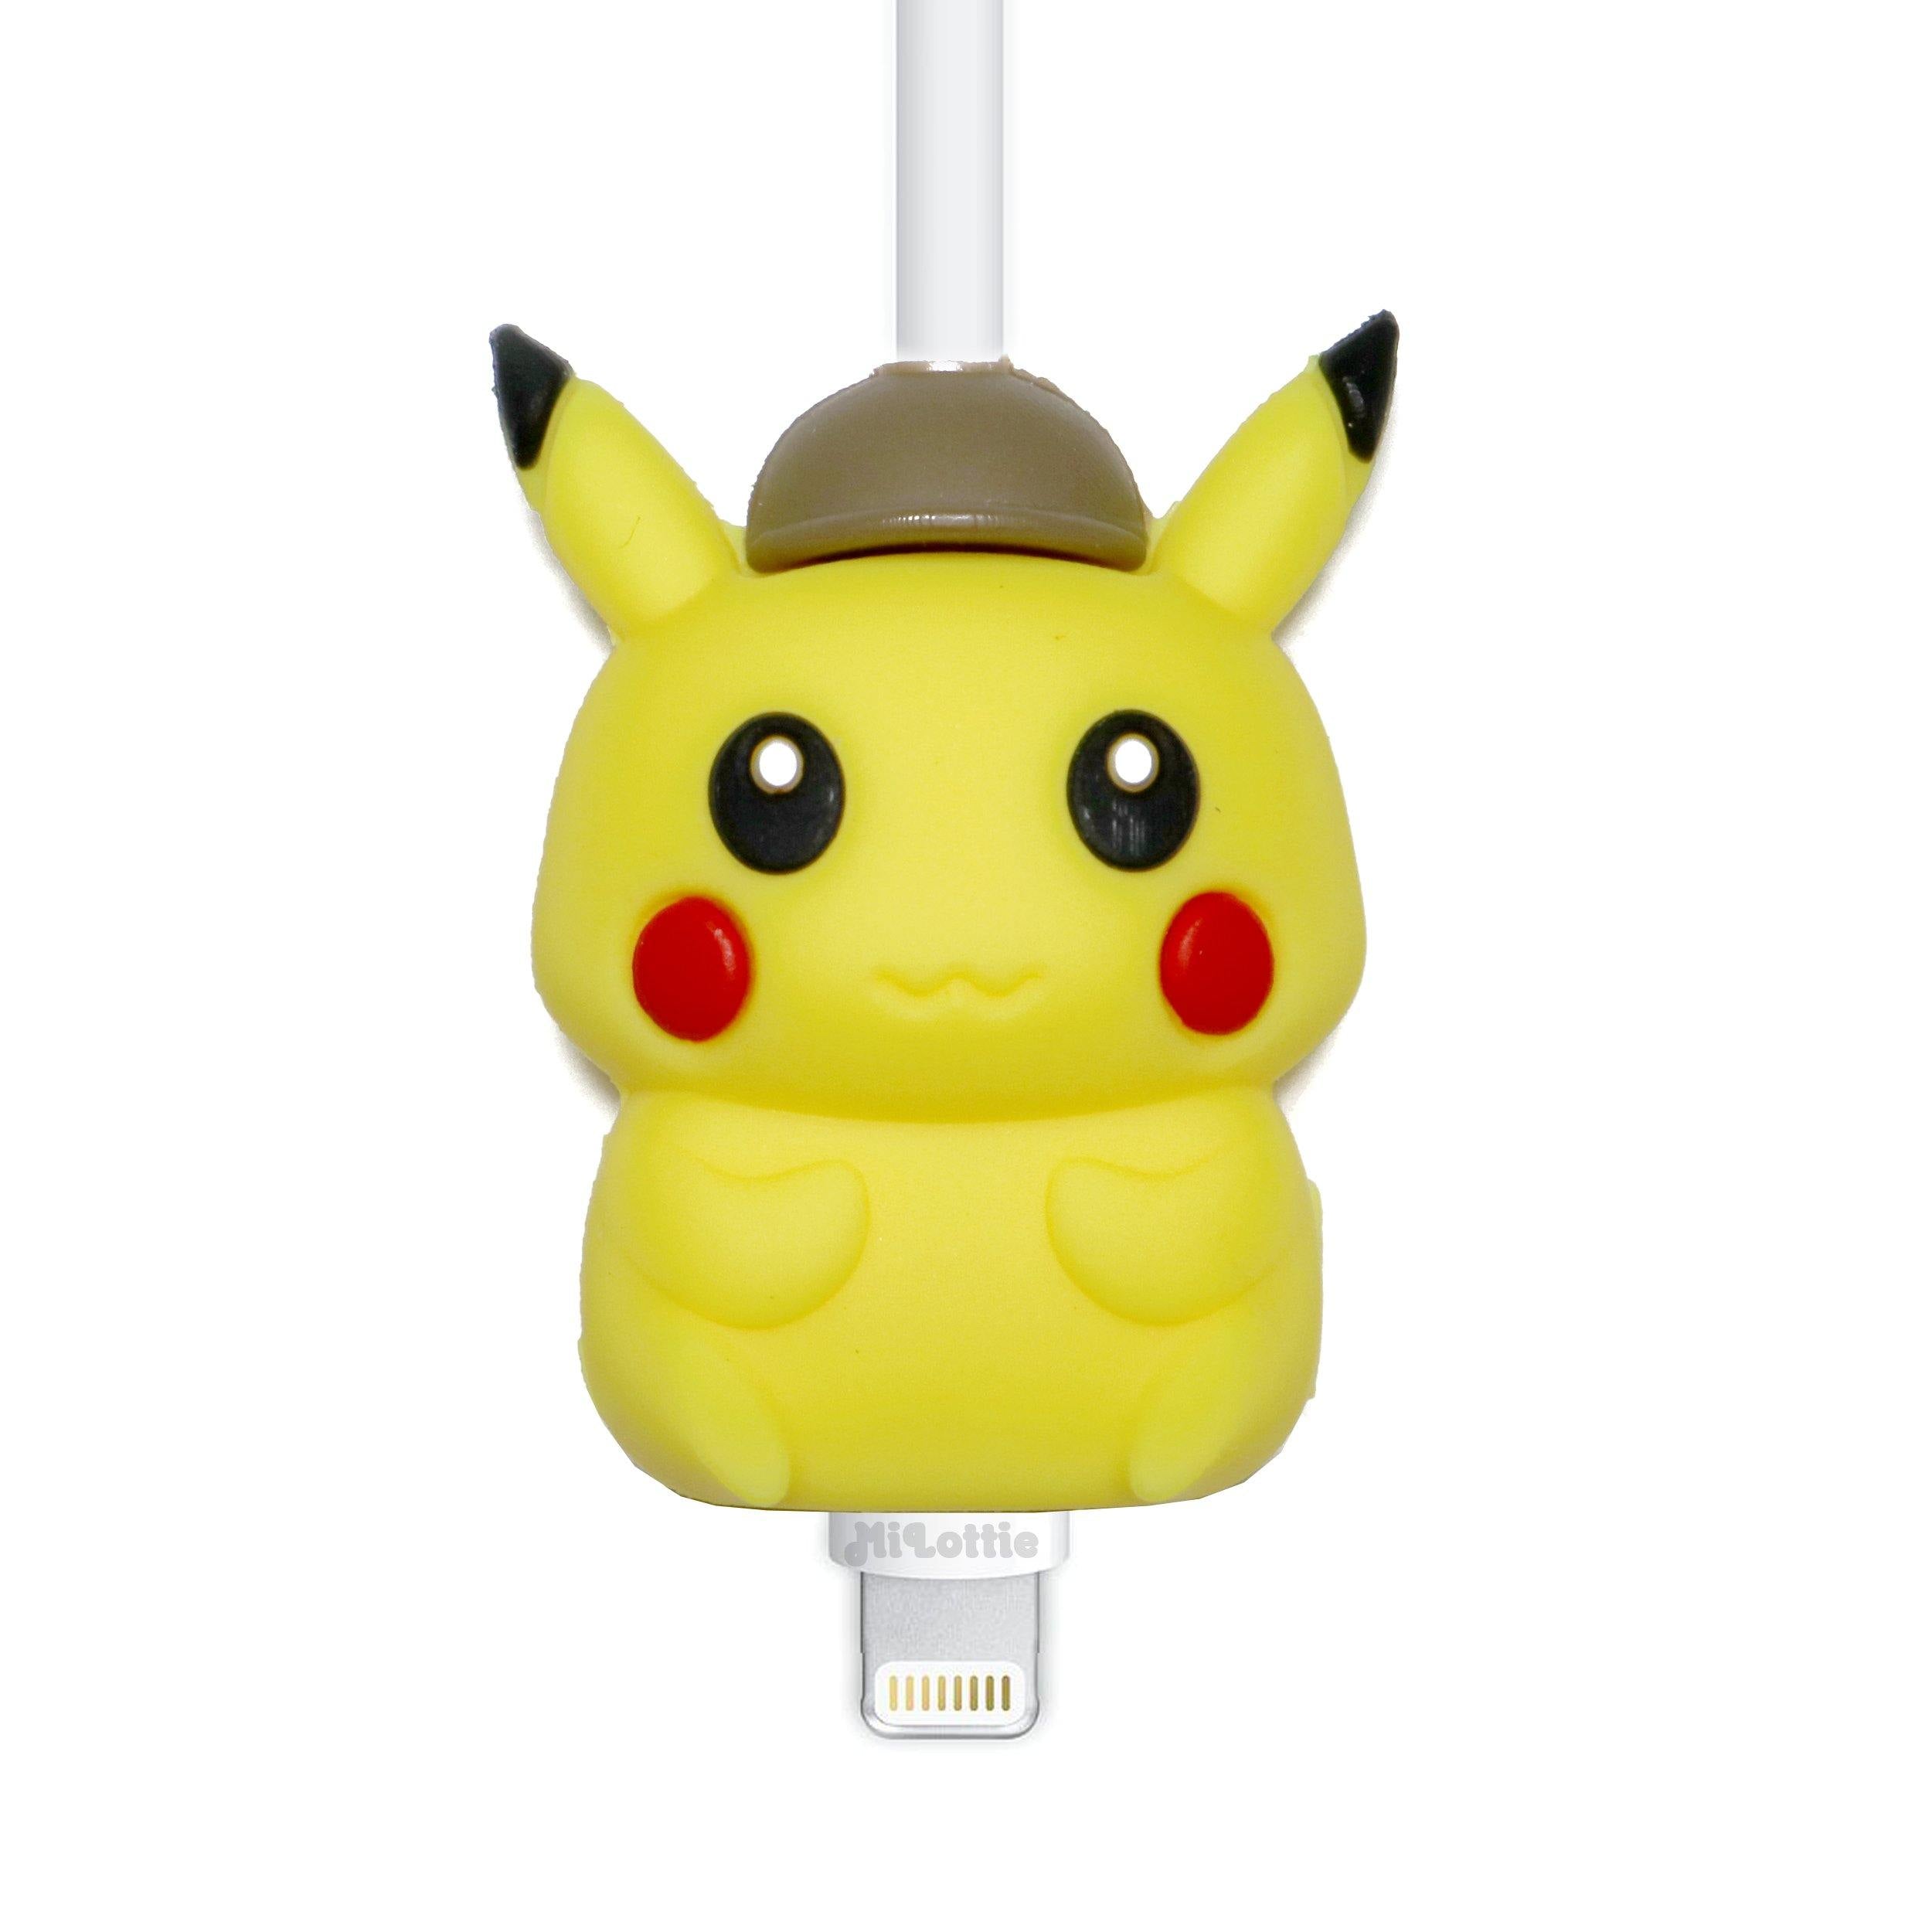 Detective Pikachu Pokemon Lightning cable - MiLottie